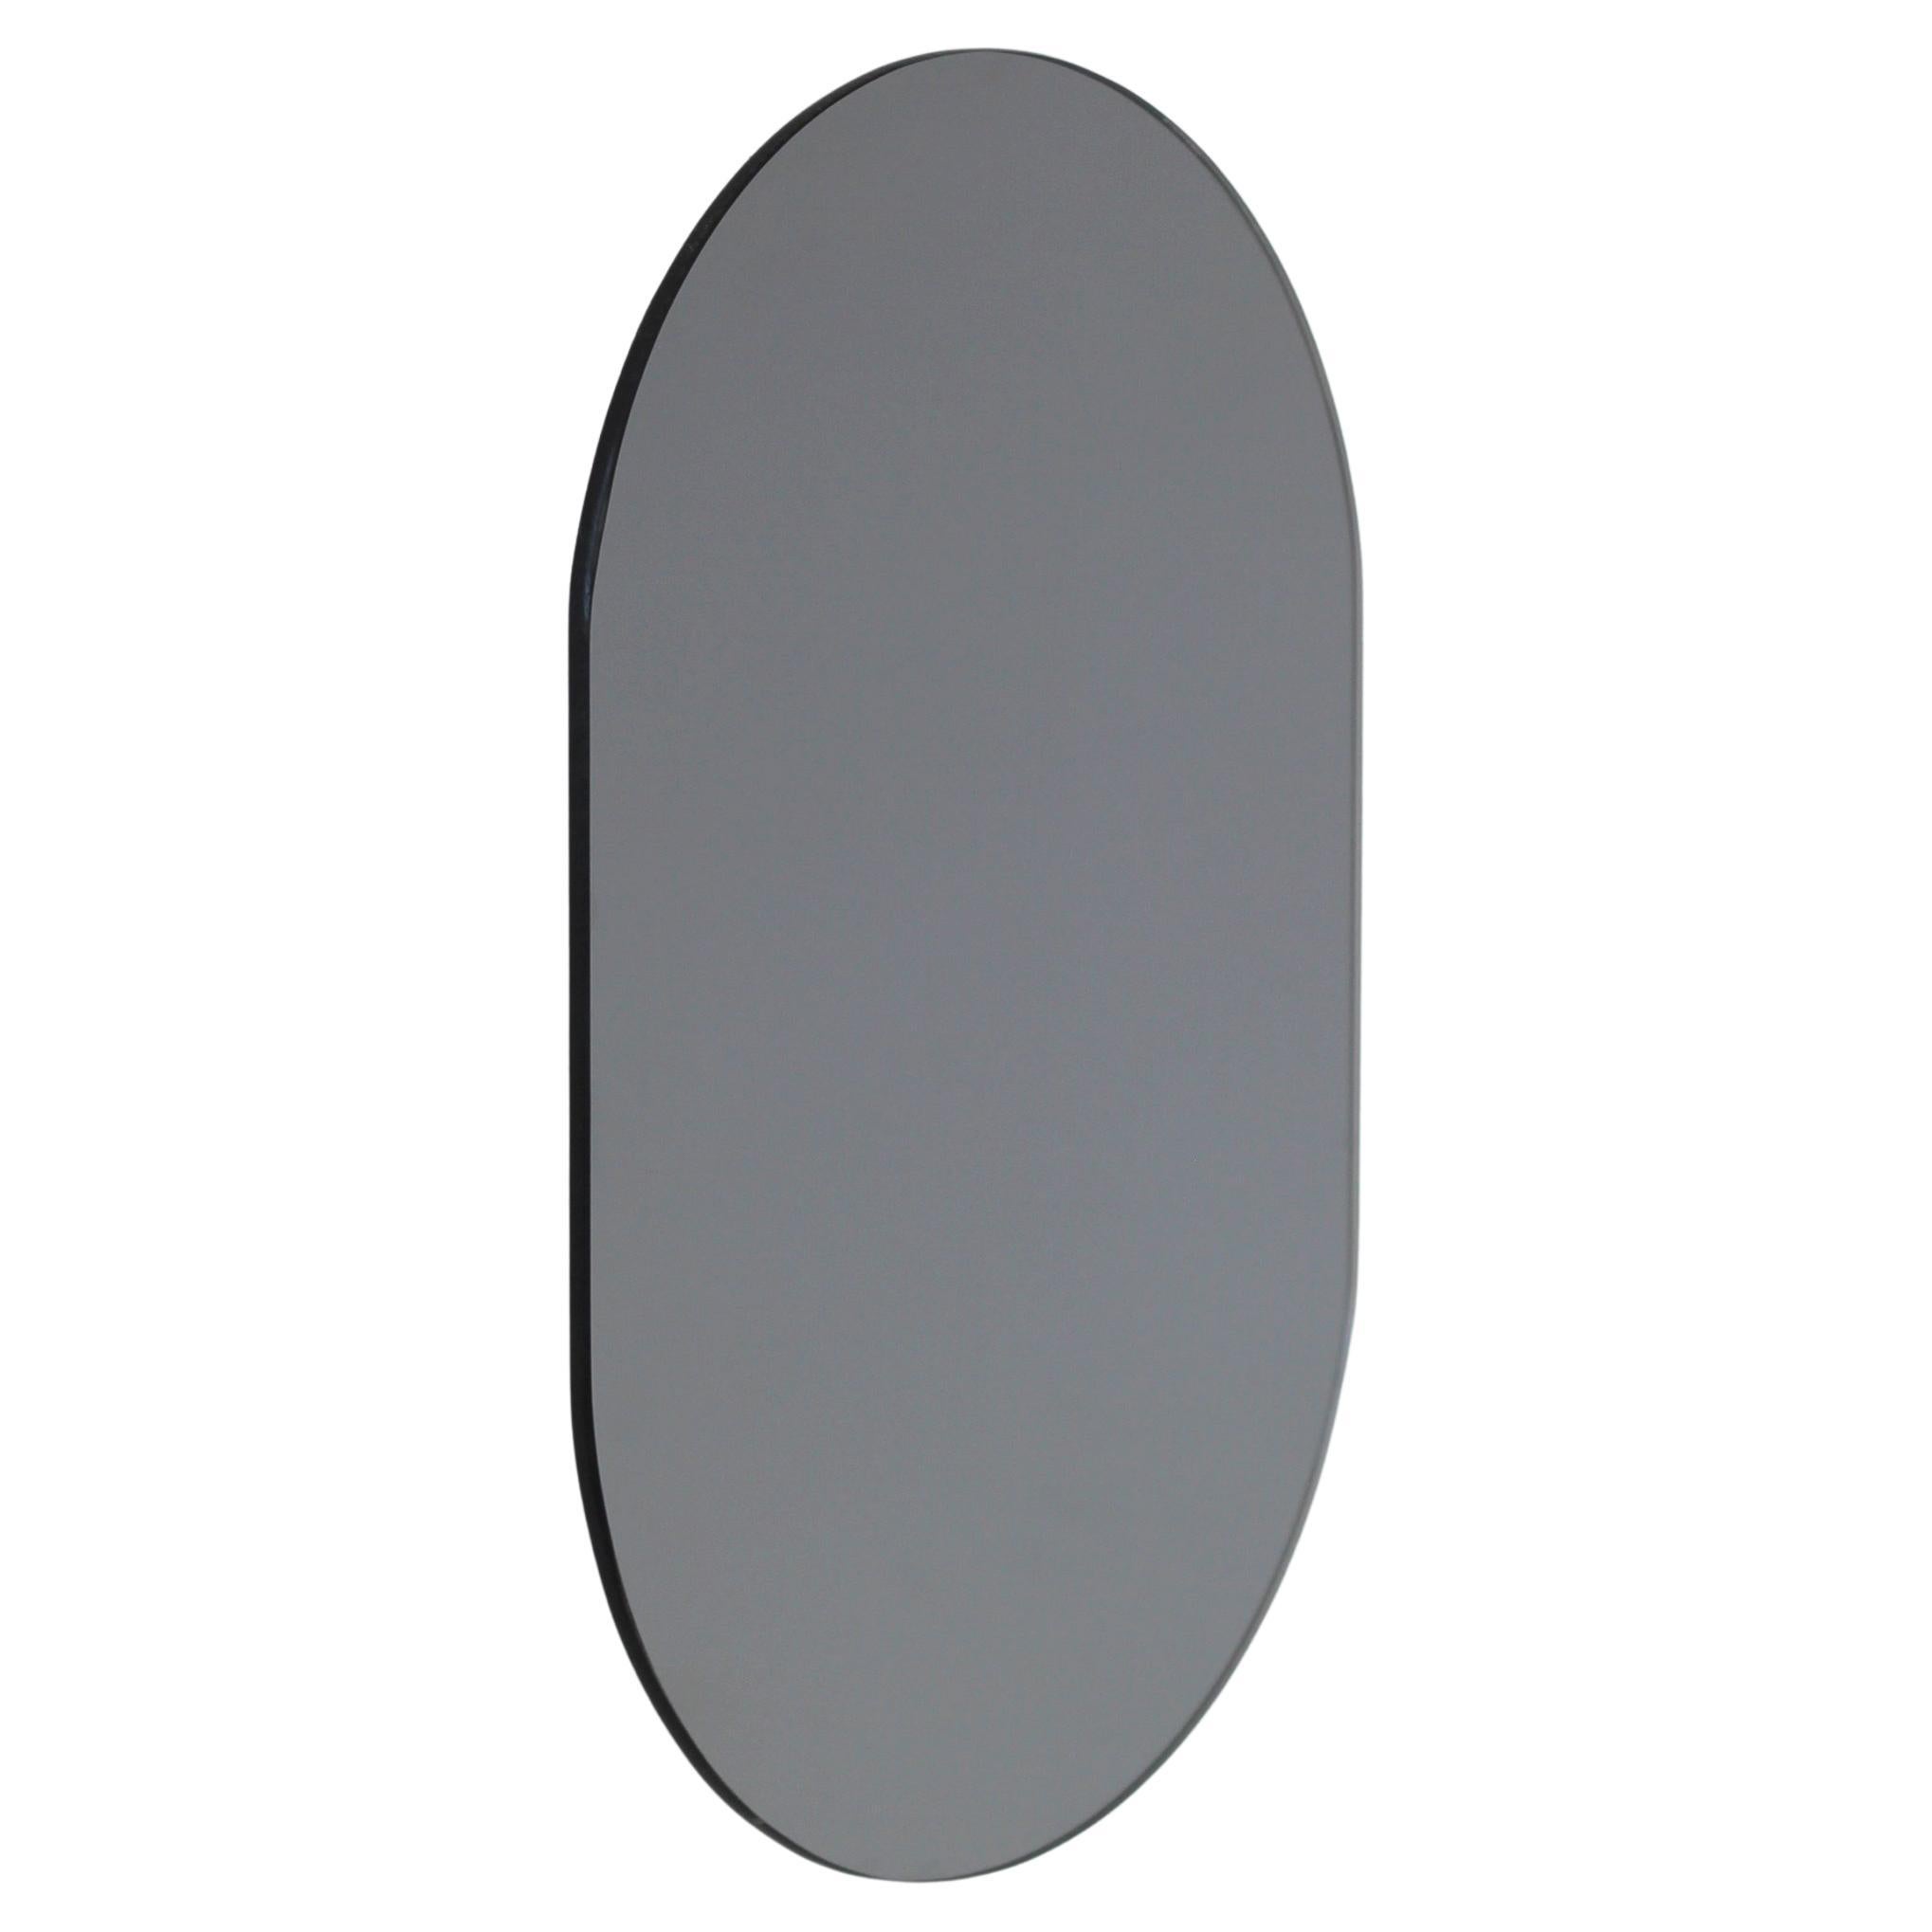 Capsula Capsule shaped Black Tinted Minimalist Frameless Mirror, Large For Sale